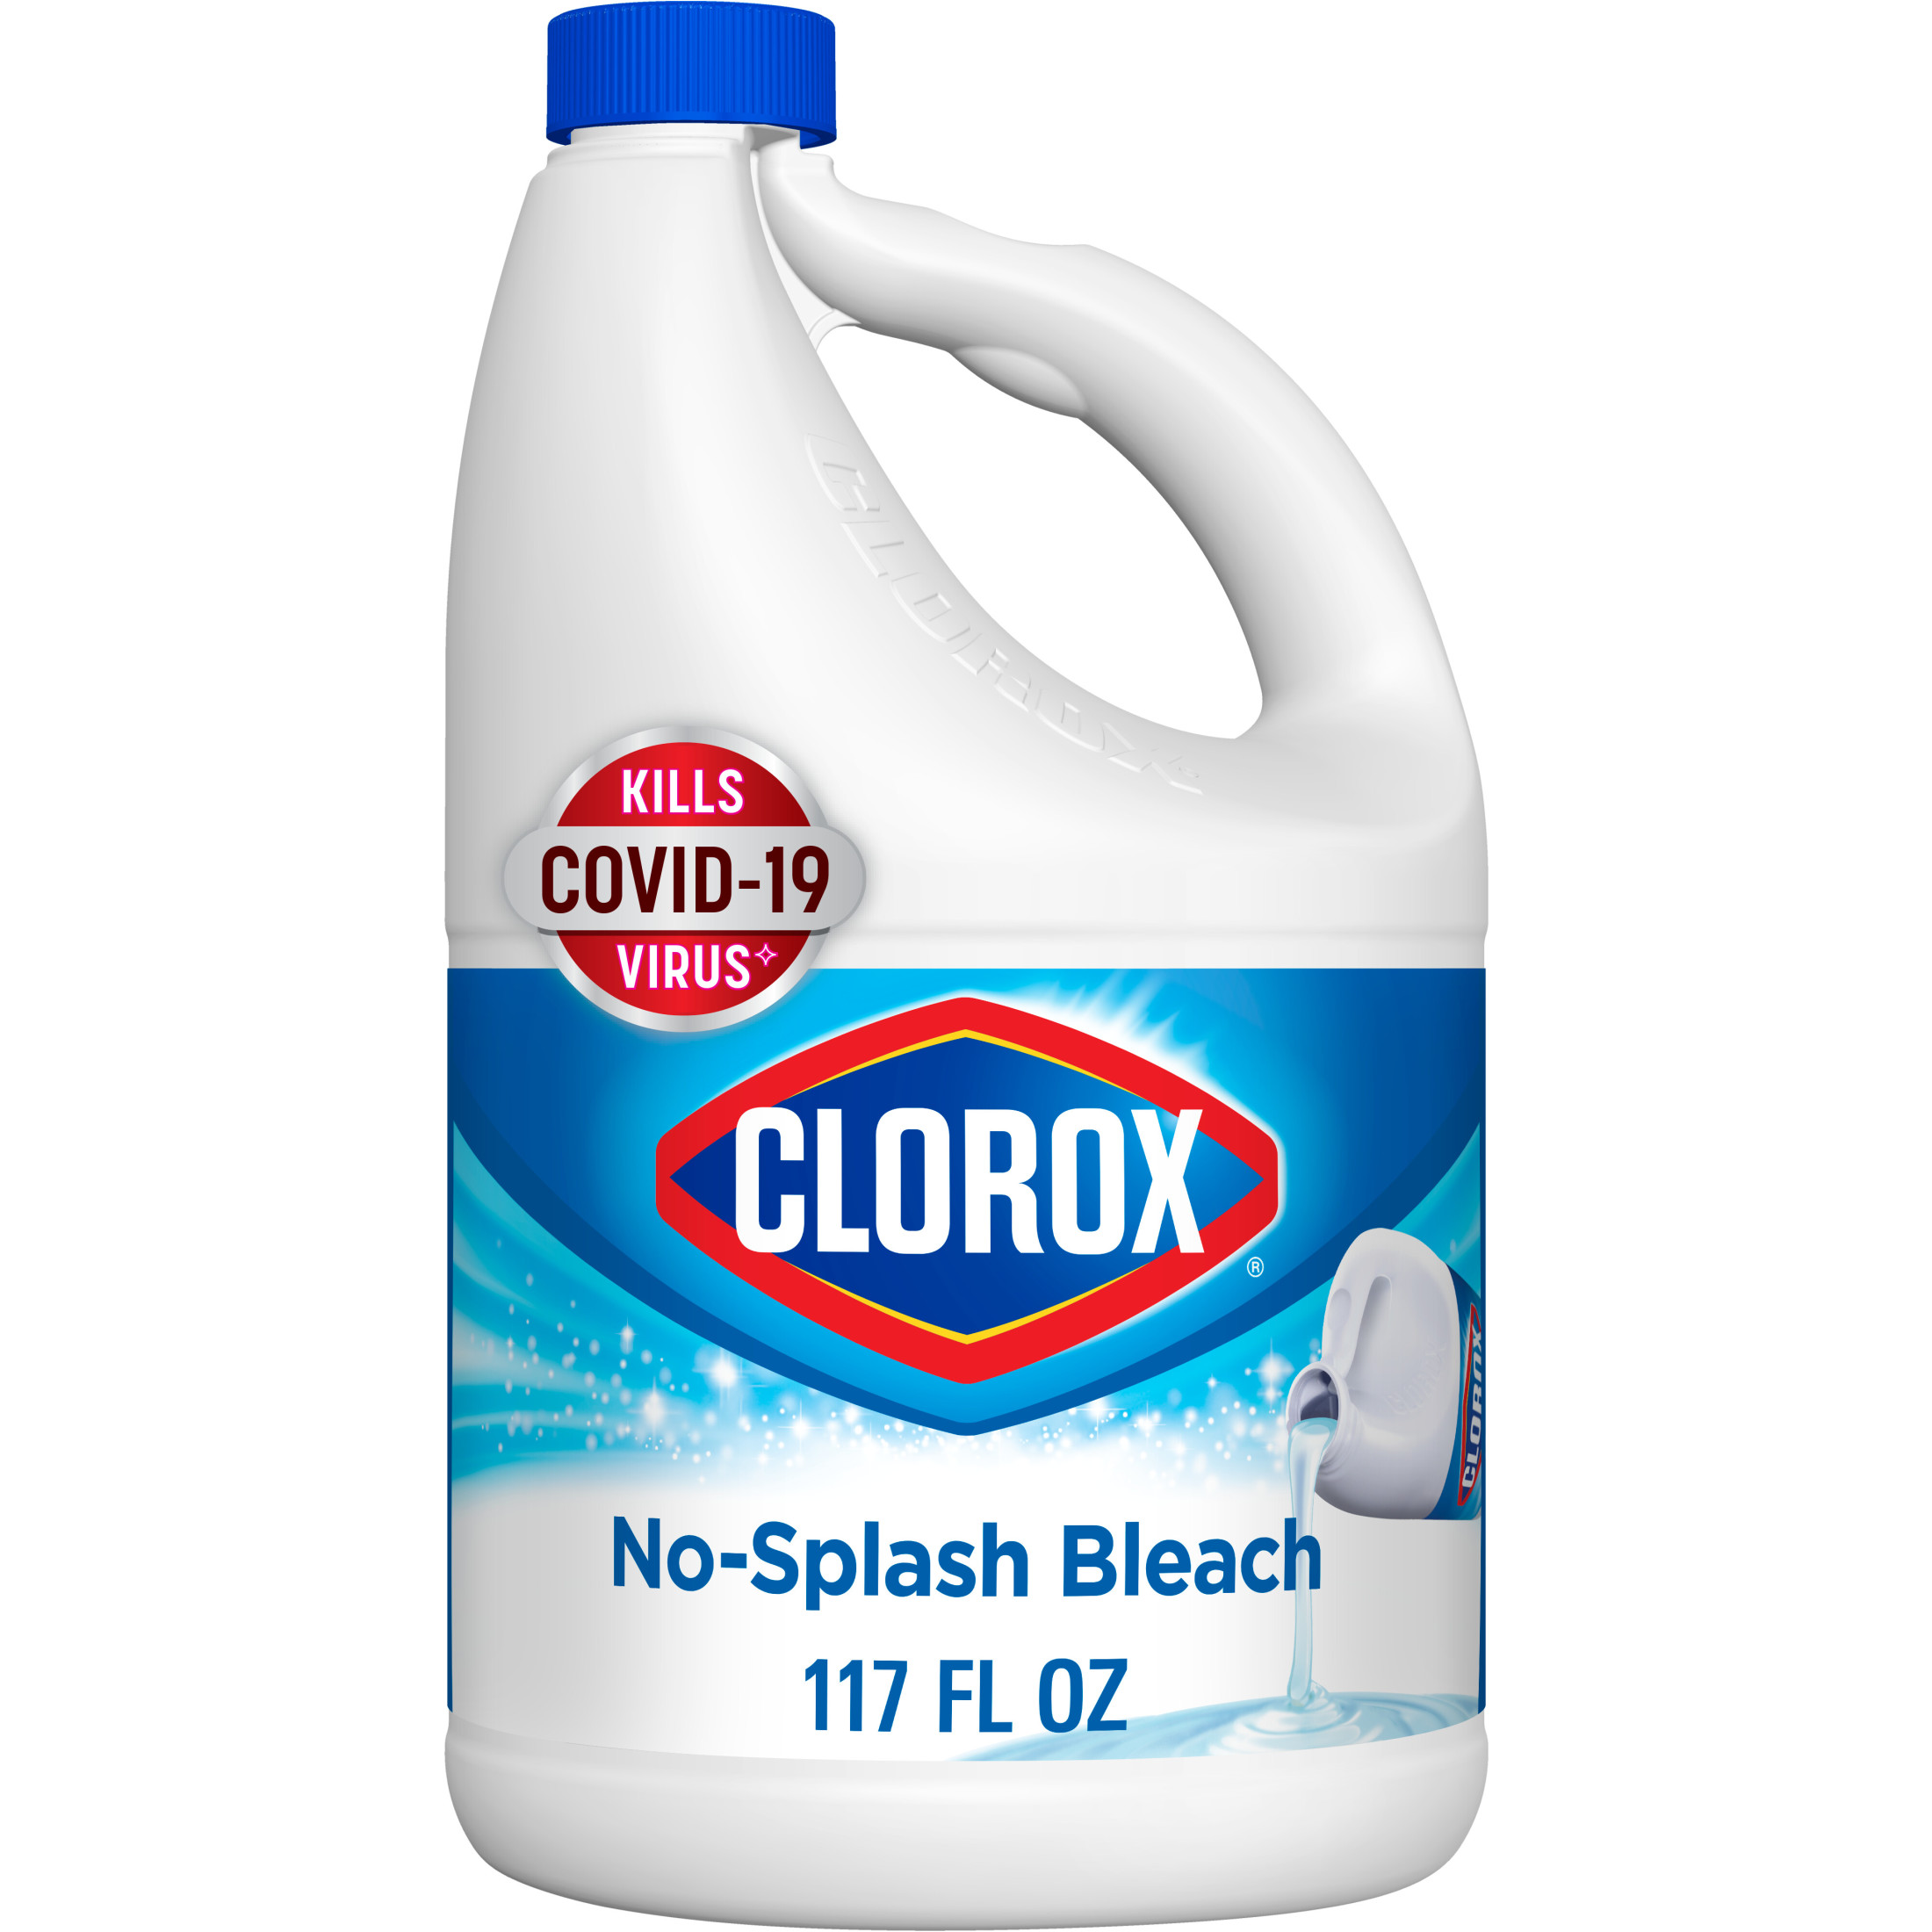 Clorox Splash-Less Liquid Bleach Cleaner, Regular Scent, 117 fl oz - image 1 of 8